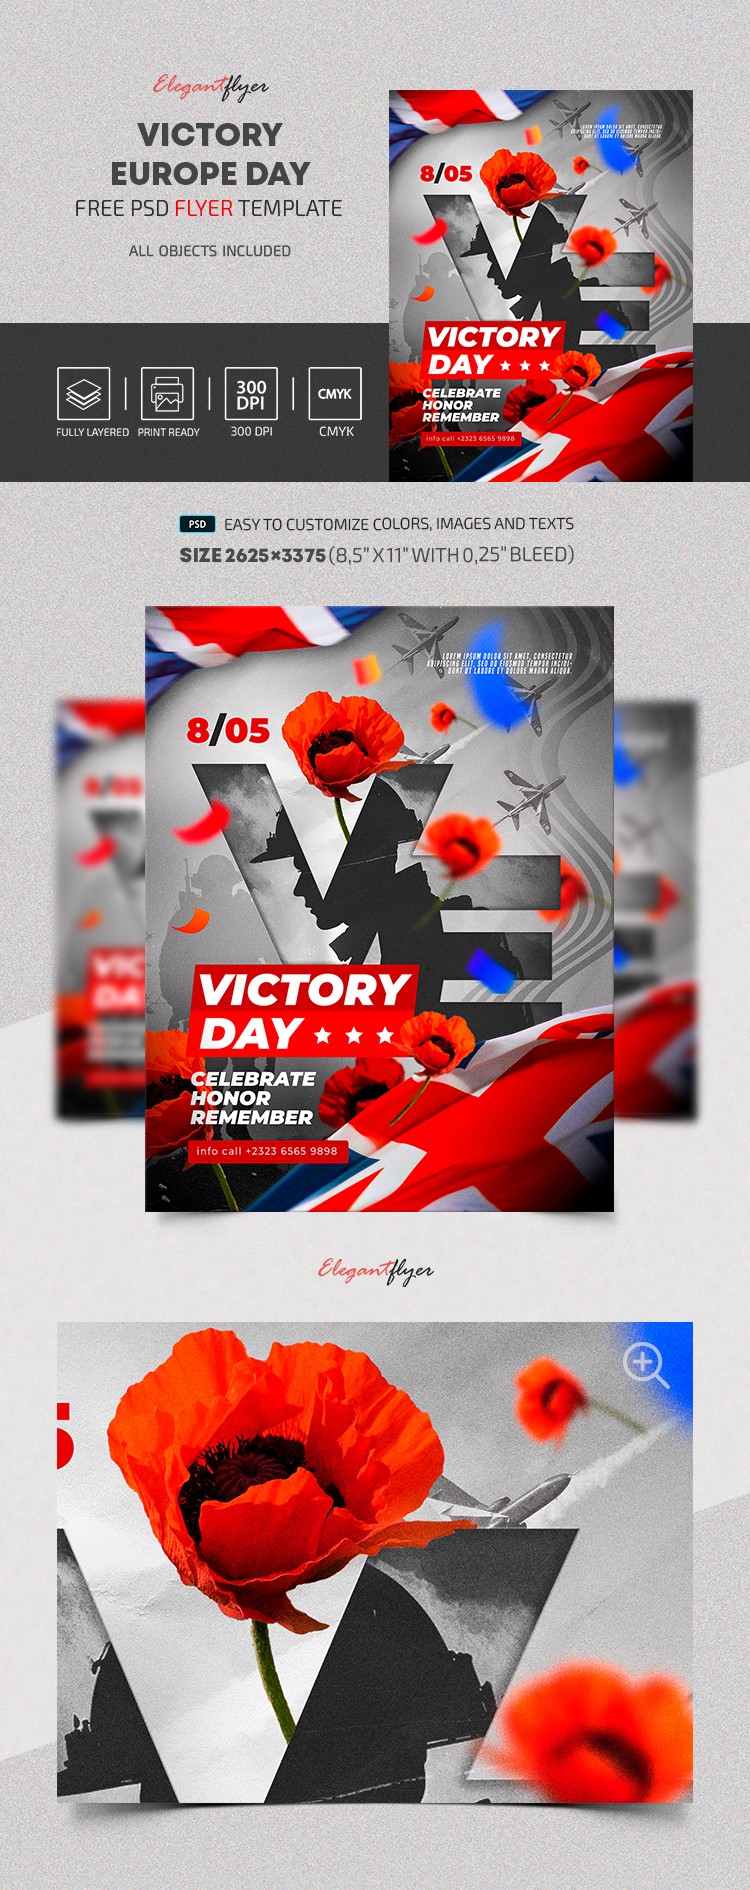 Jour de la Victoire en Europe by ElegantFlyer